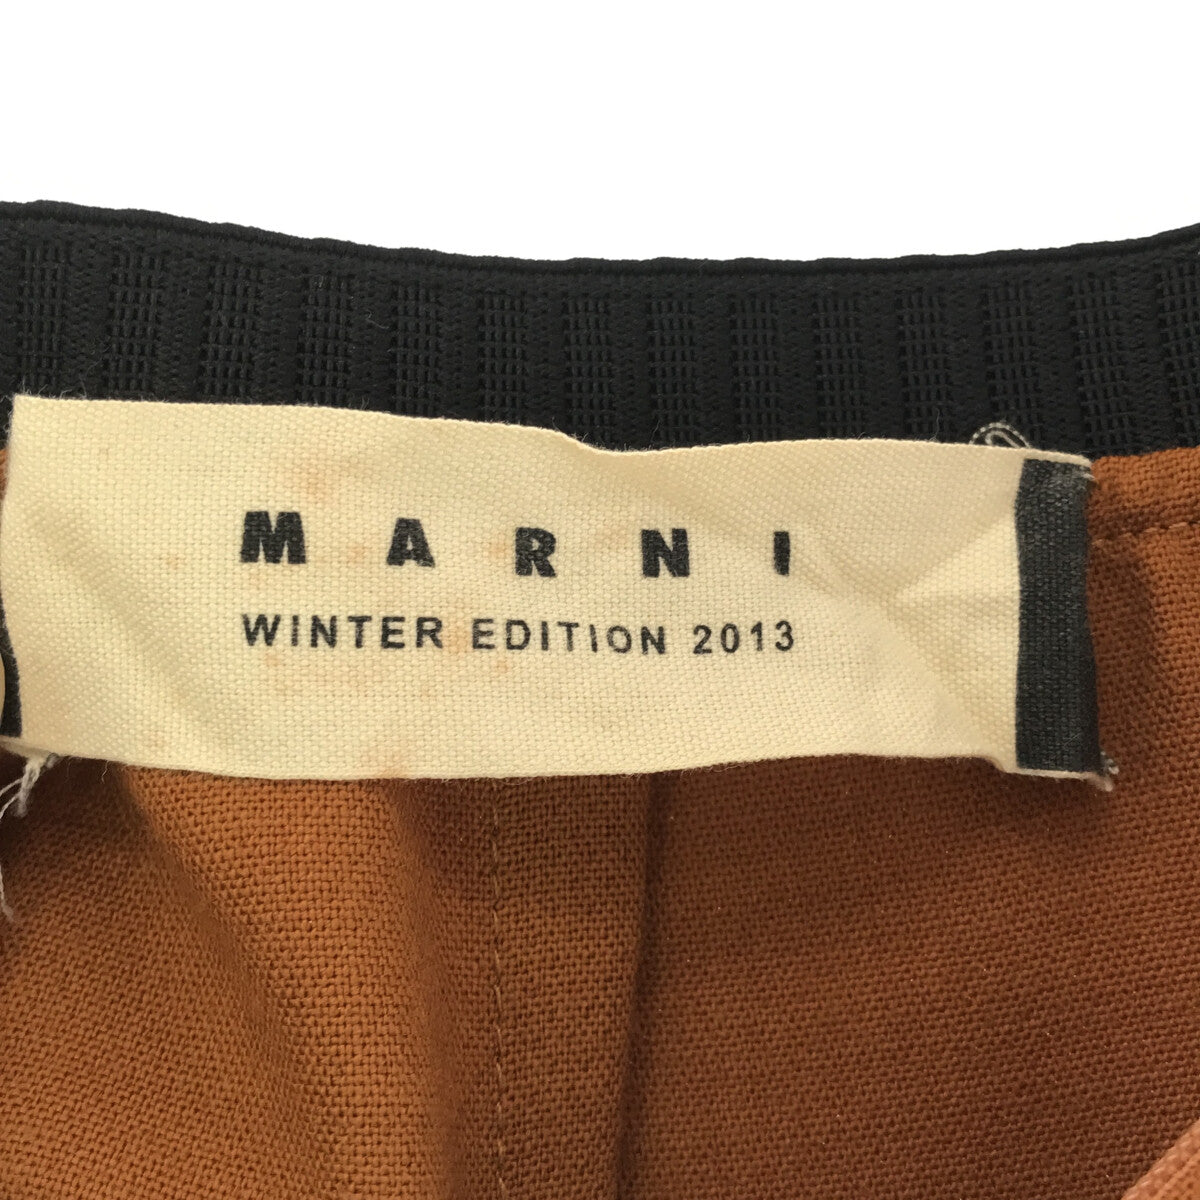 MARNI / マルニ | ウール混 フリル 切替 スカート | 38 | ブラウン | レディース